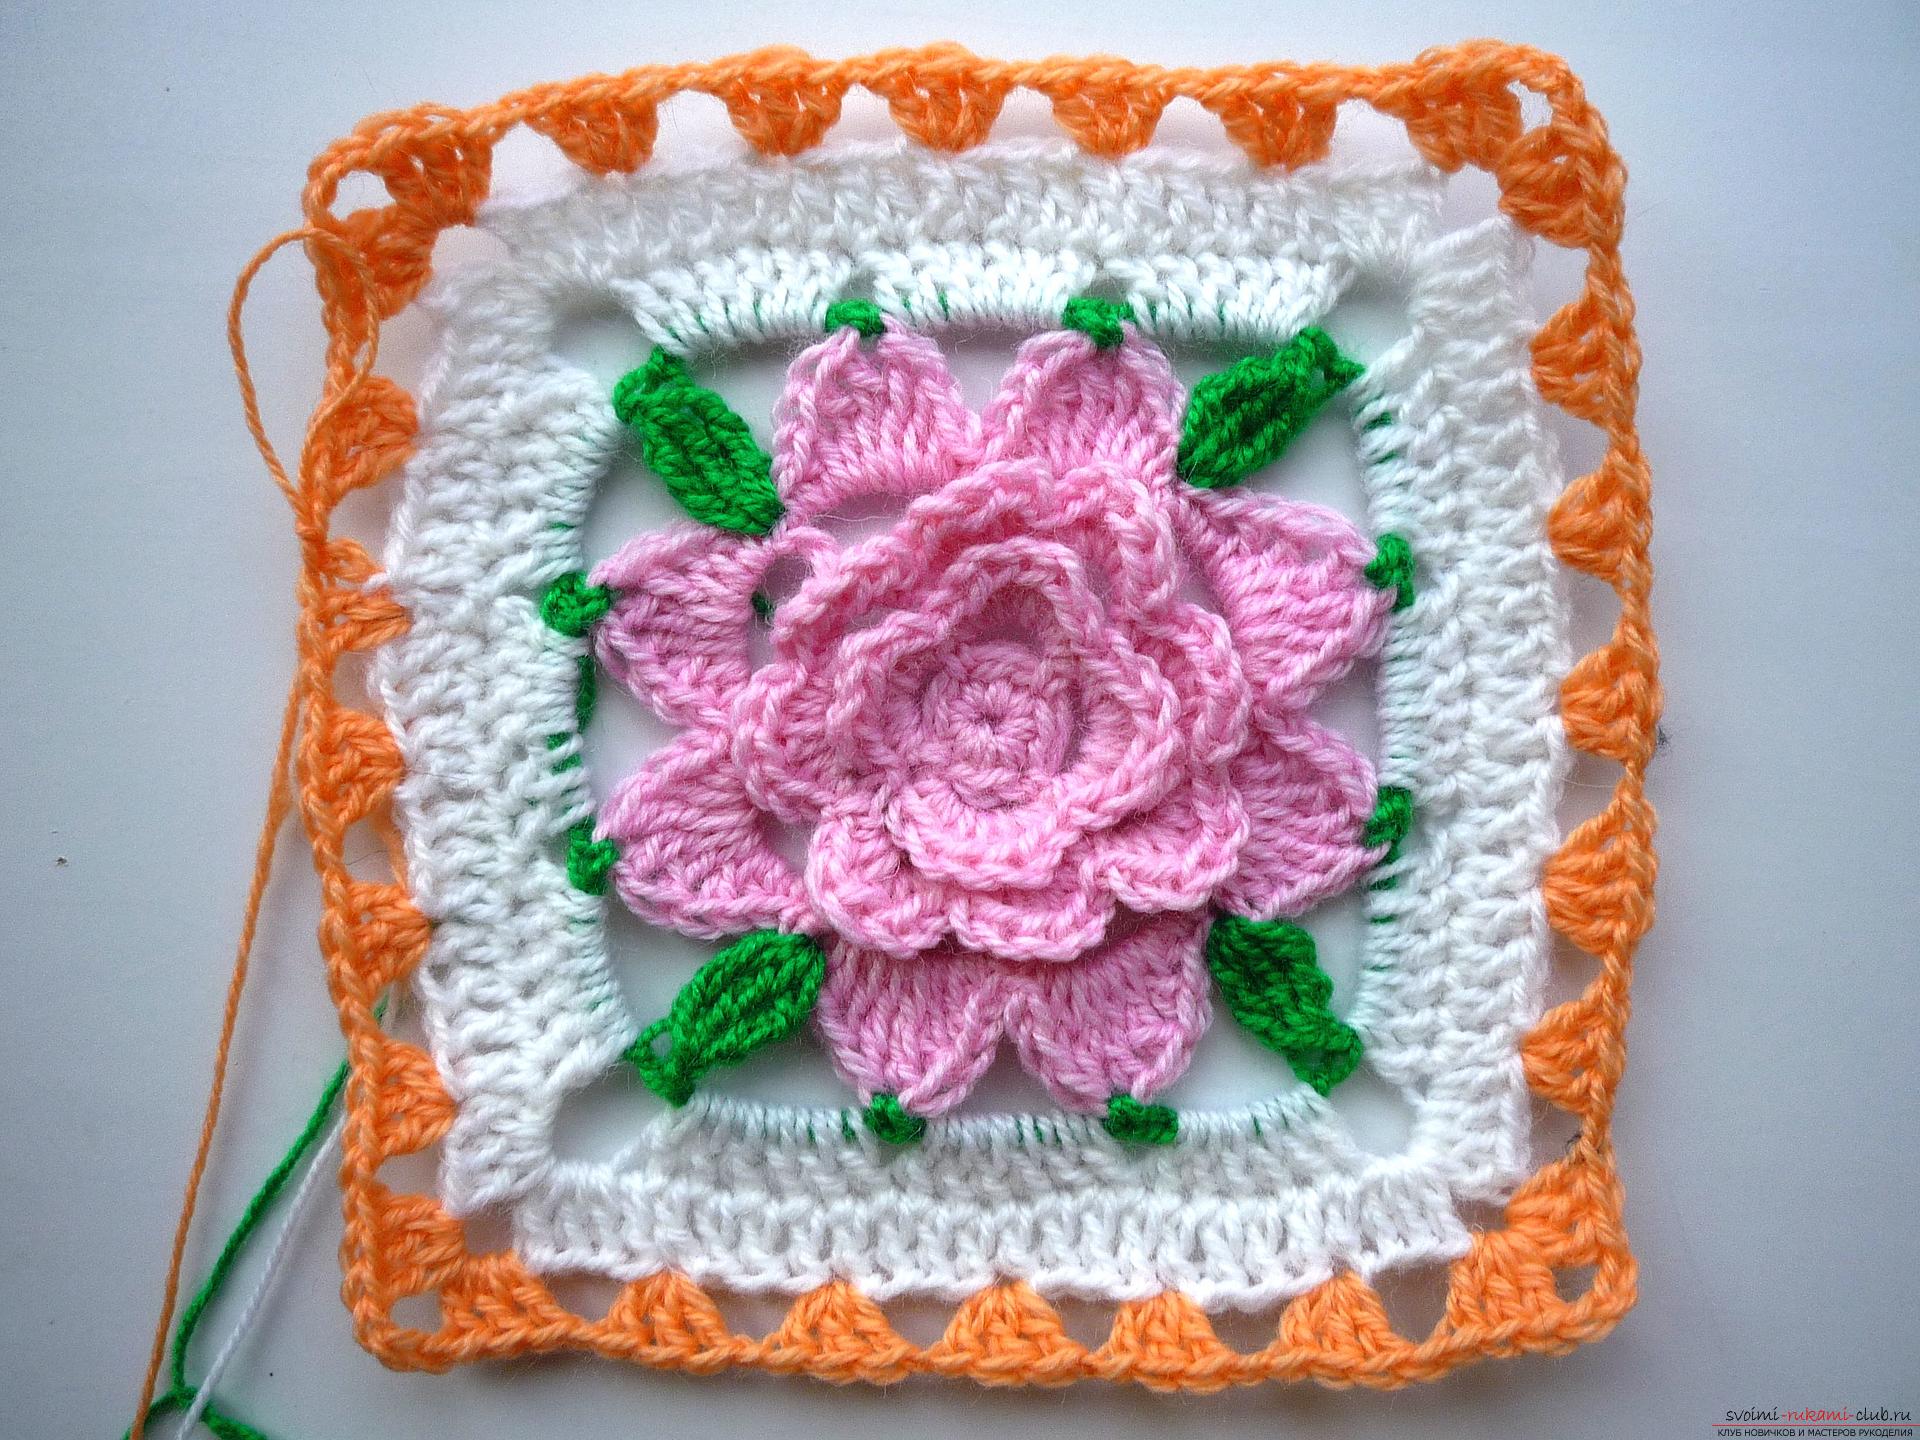 This crochet masterclass contains a crochet color scheme for a plaid .. Photo # 22